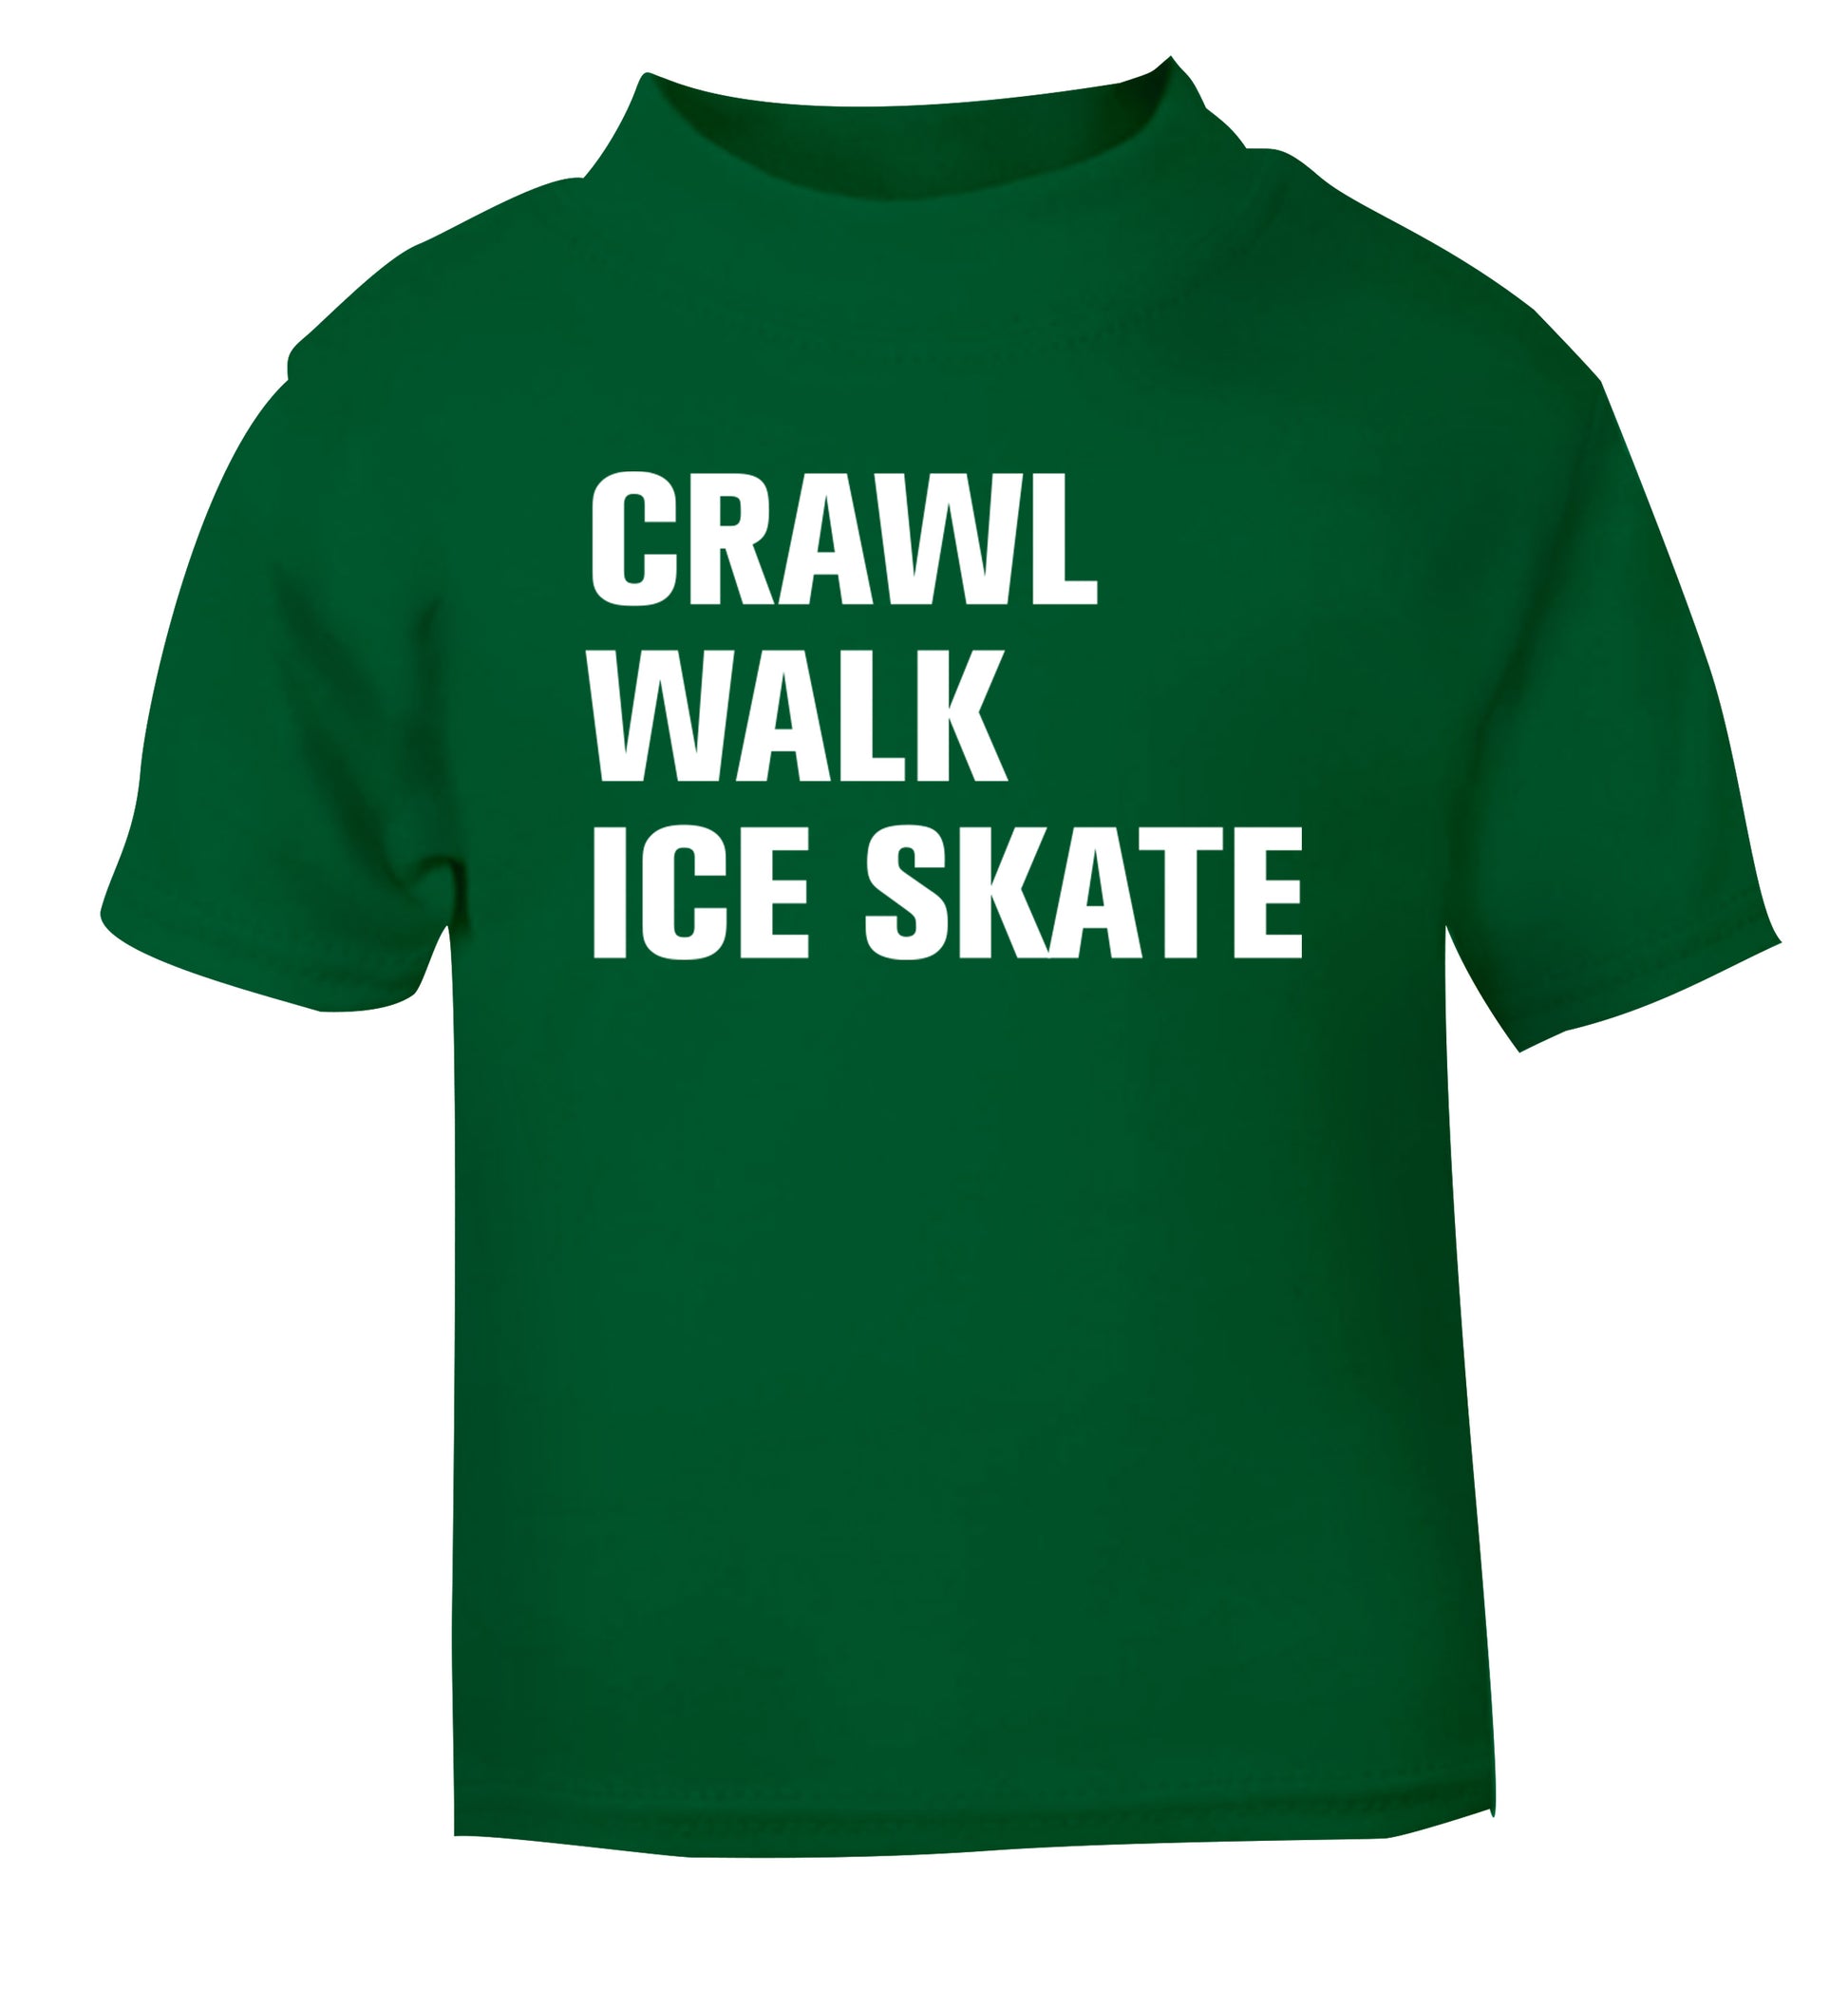 Crawl walk ice skate green Baby Toddler Tshirt 2 Years